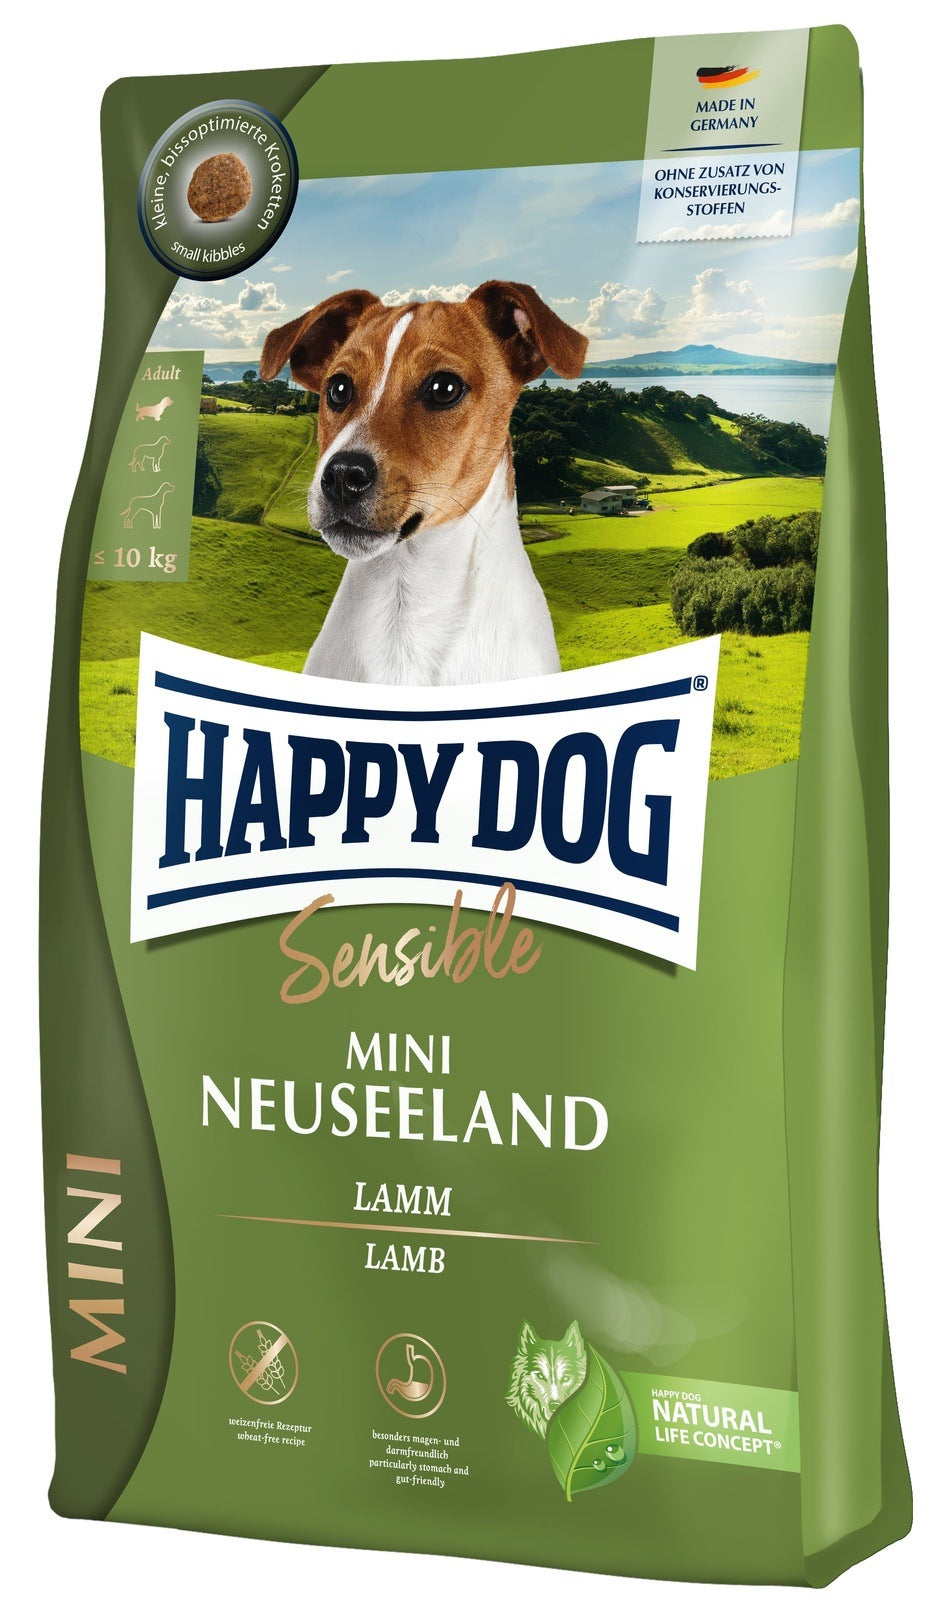 Happy Dog Sensible Mini Neuseeland - zoo.de